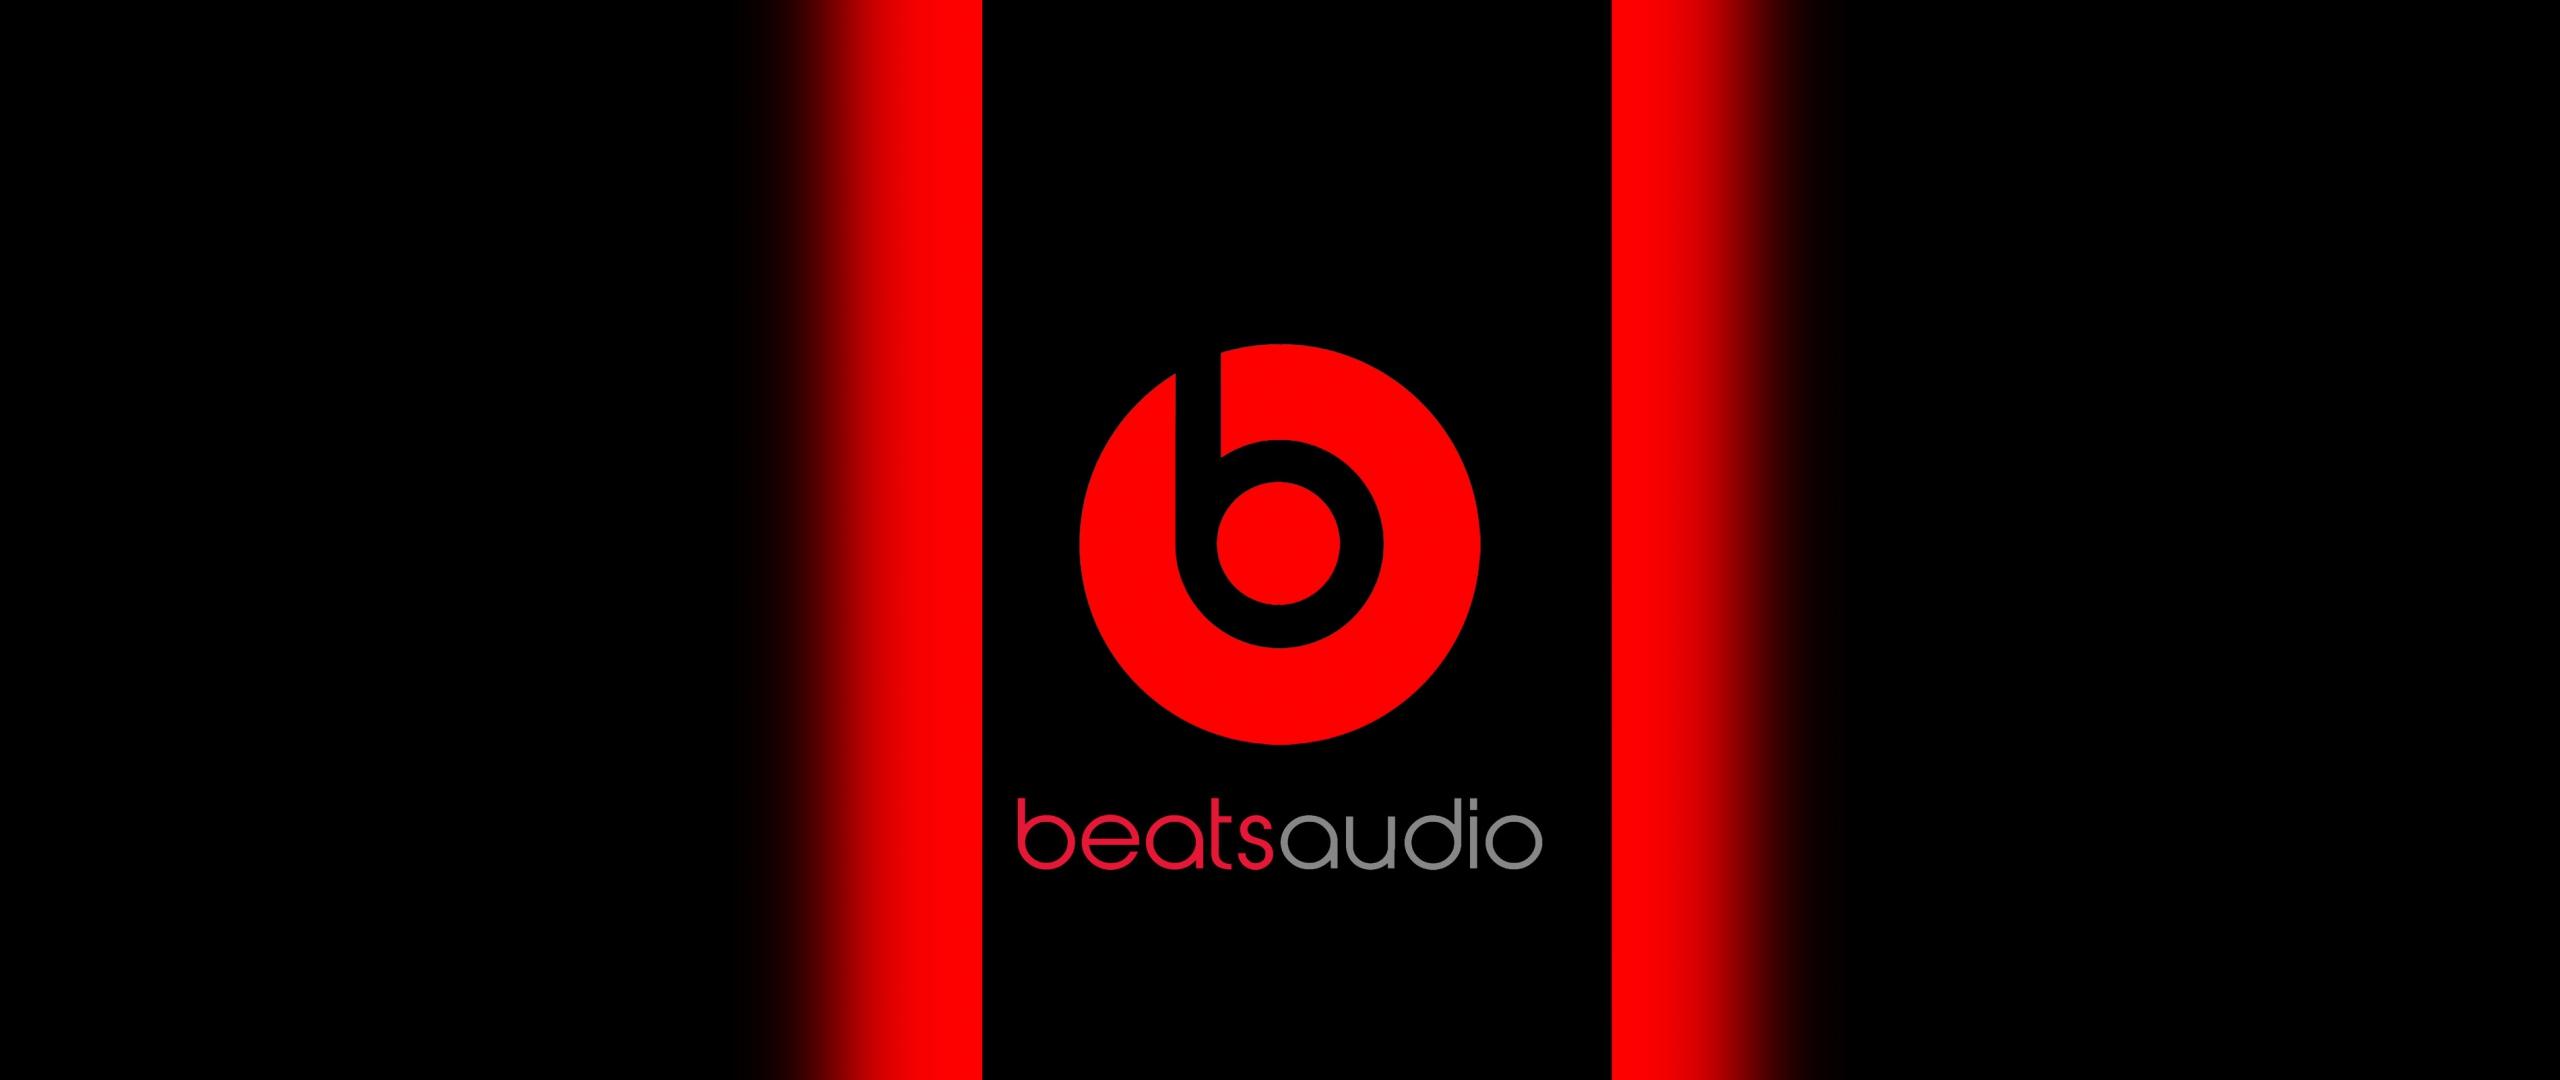 Red Beats Logo - HD Background Beats Audio Logo Red Black Symbol Wallpaper